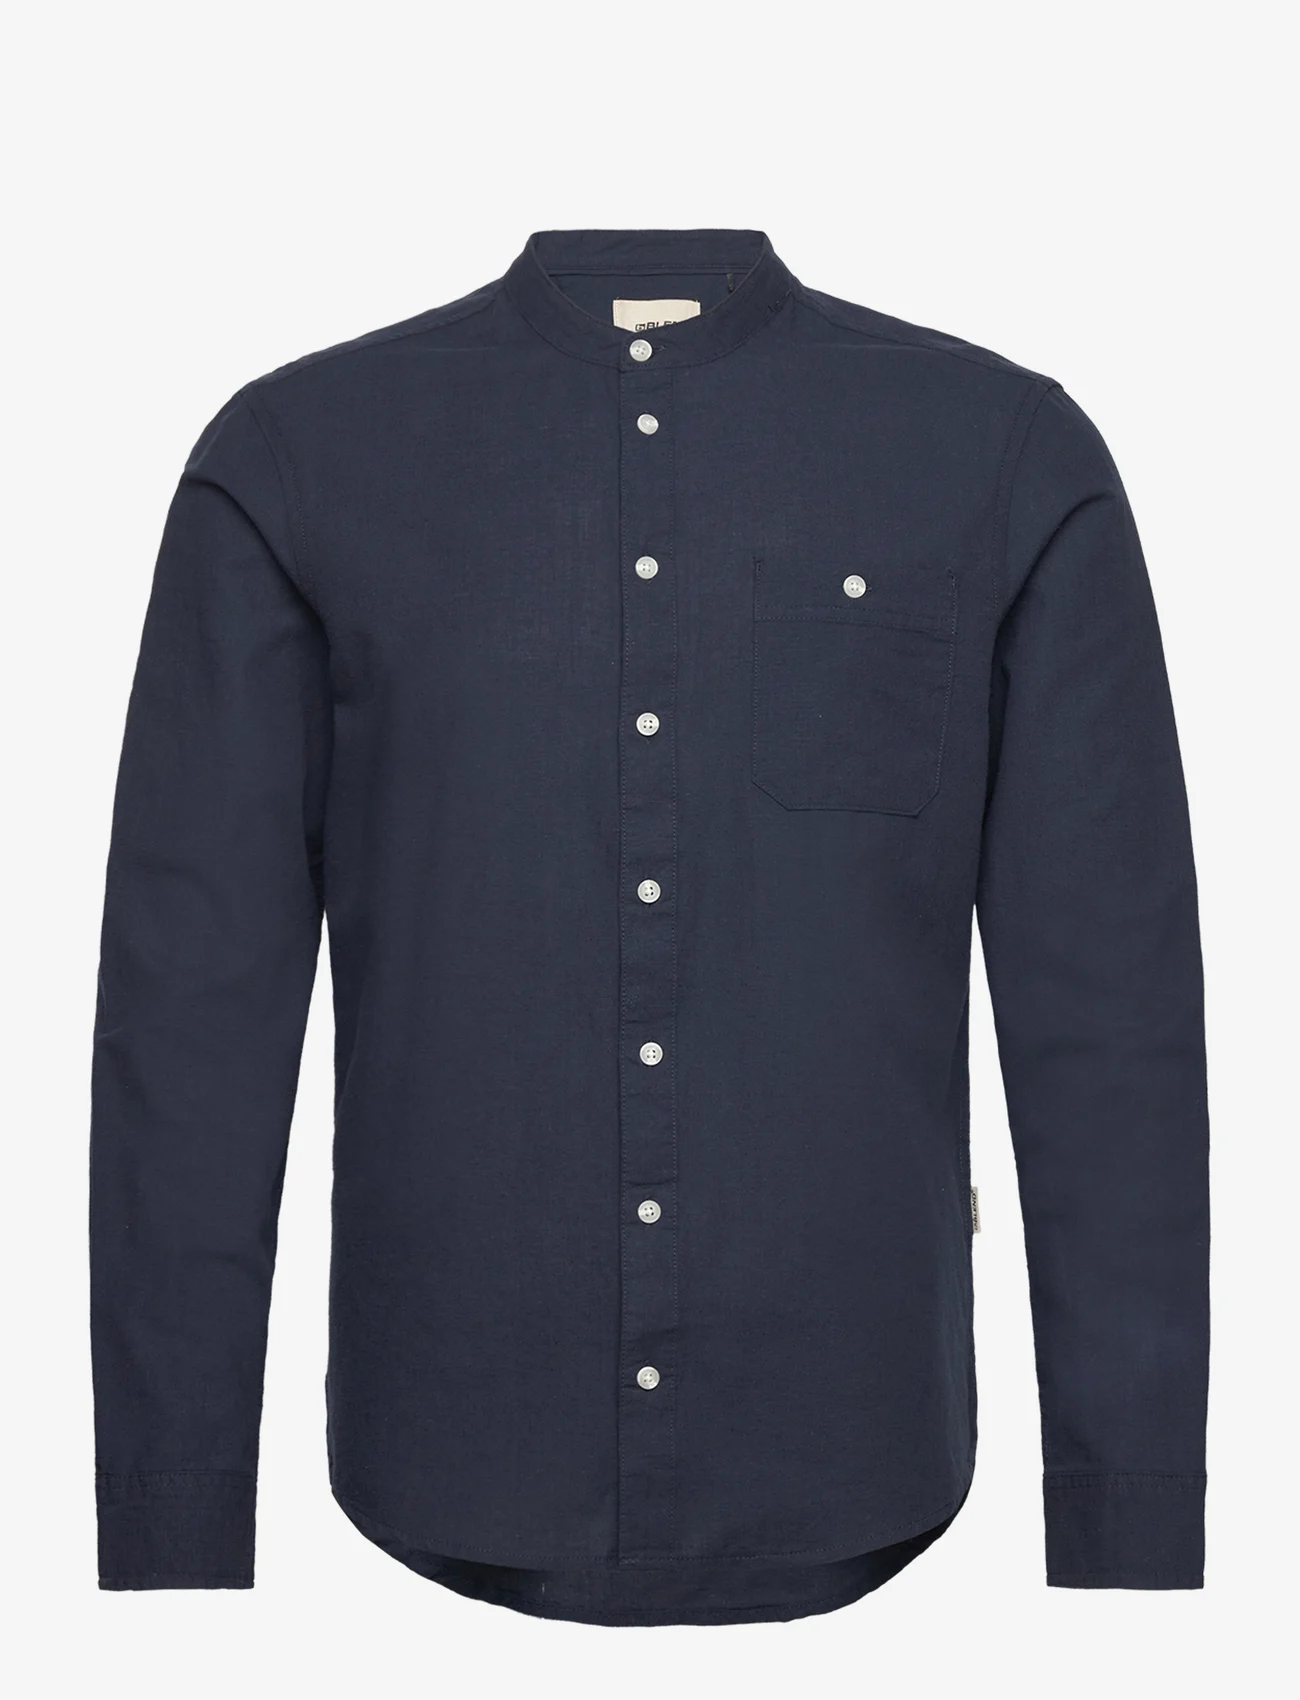 Blend - Shirt - casual skjortor - dress blues - 0